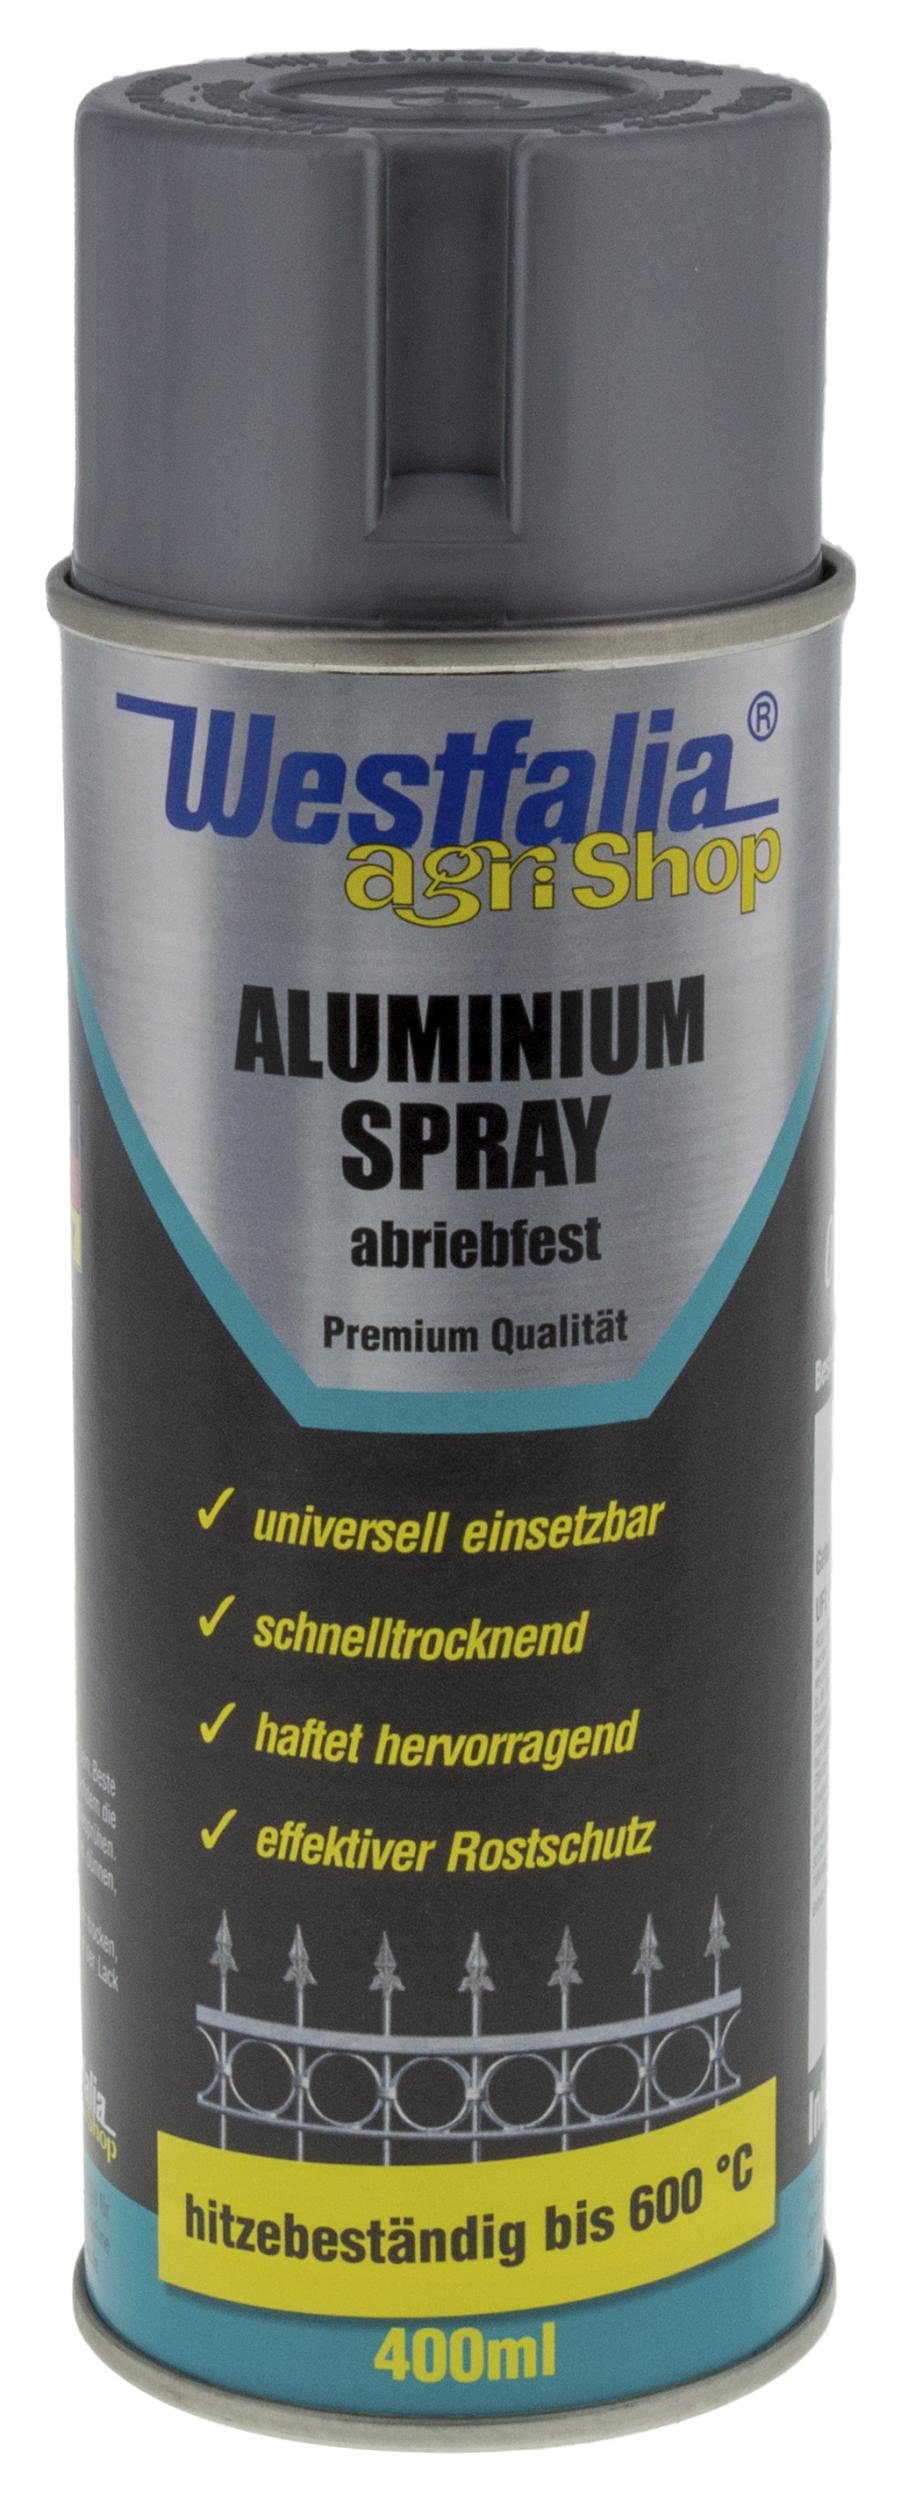 Alu-Spray, 400ml